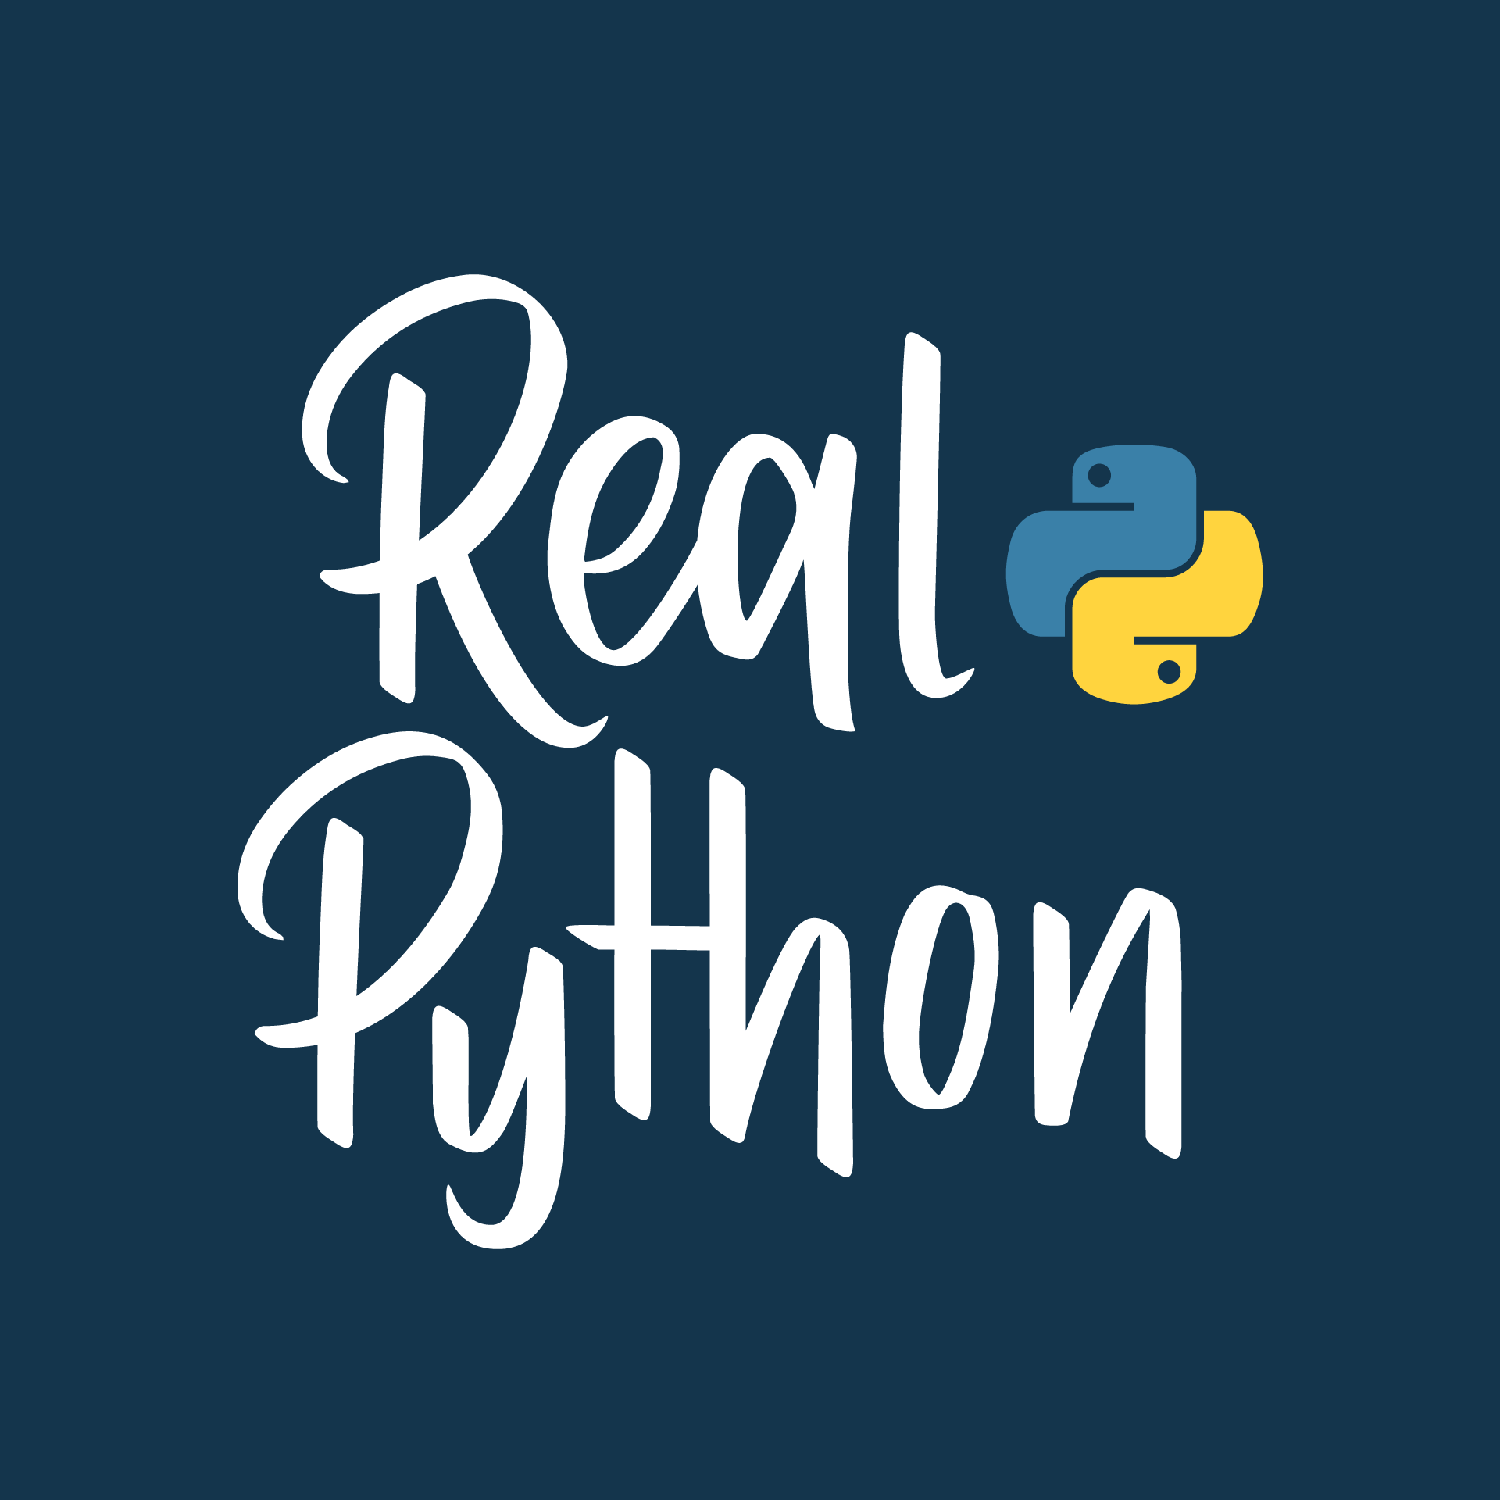 Real Python Team